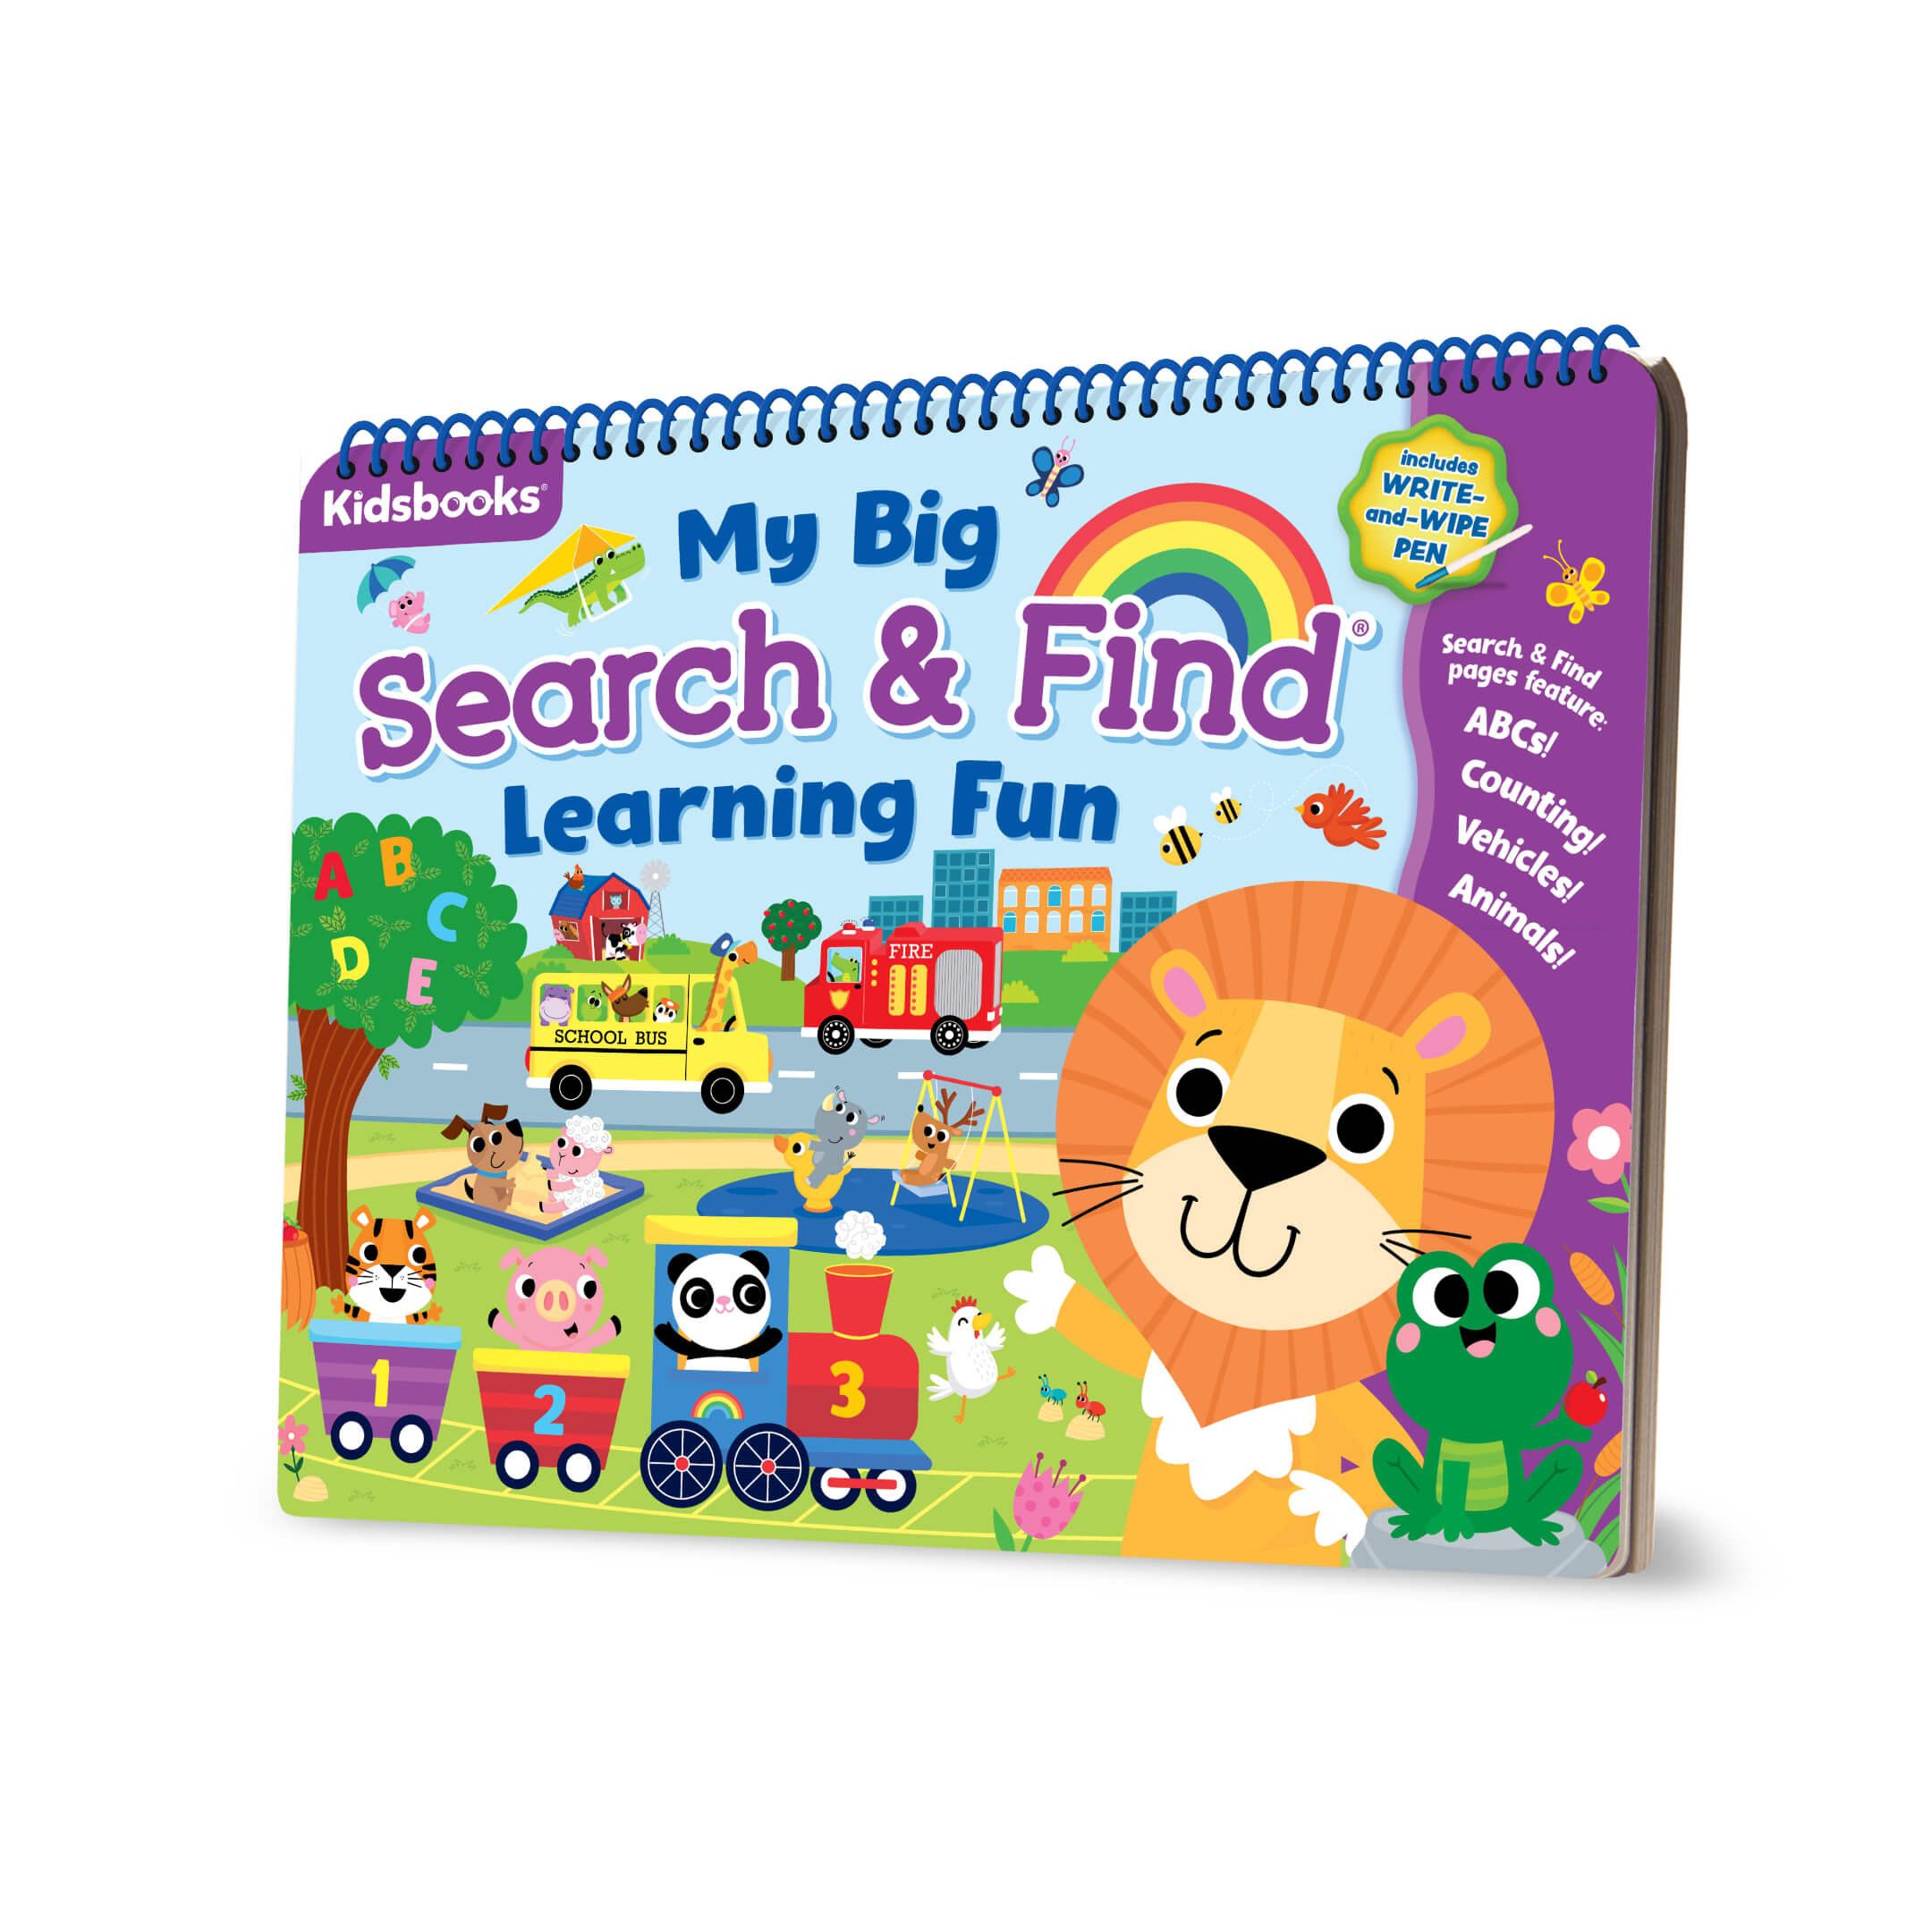 My Big Search & Find Learning Fun